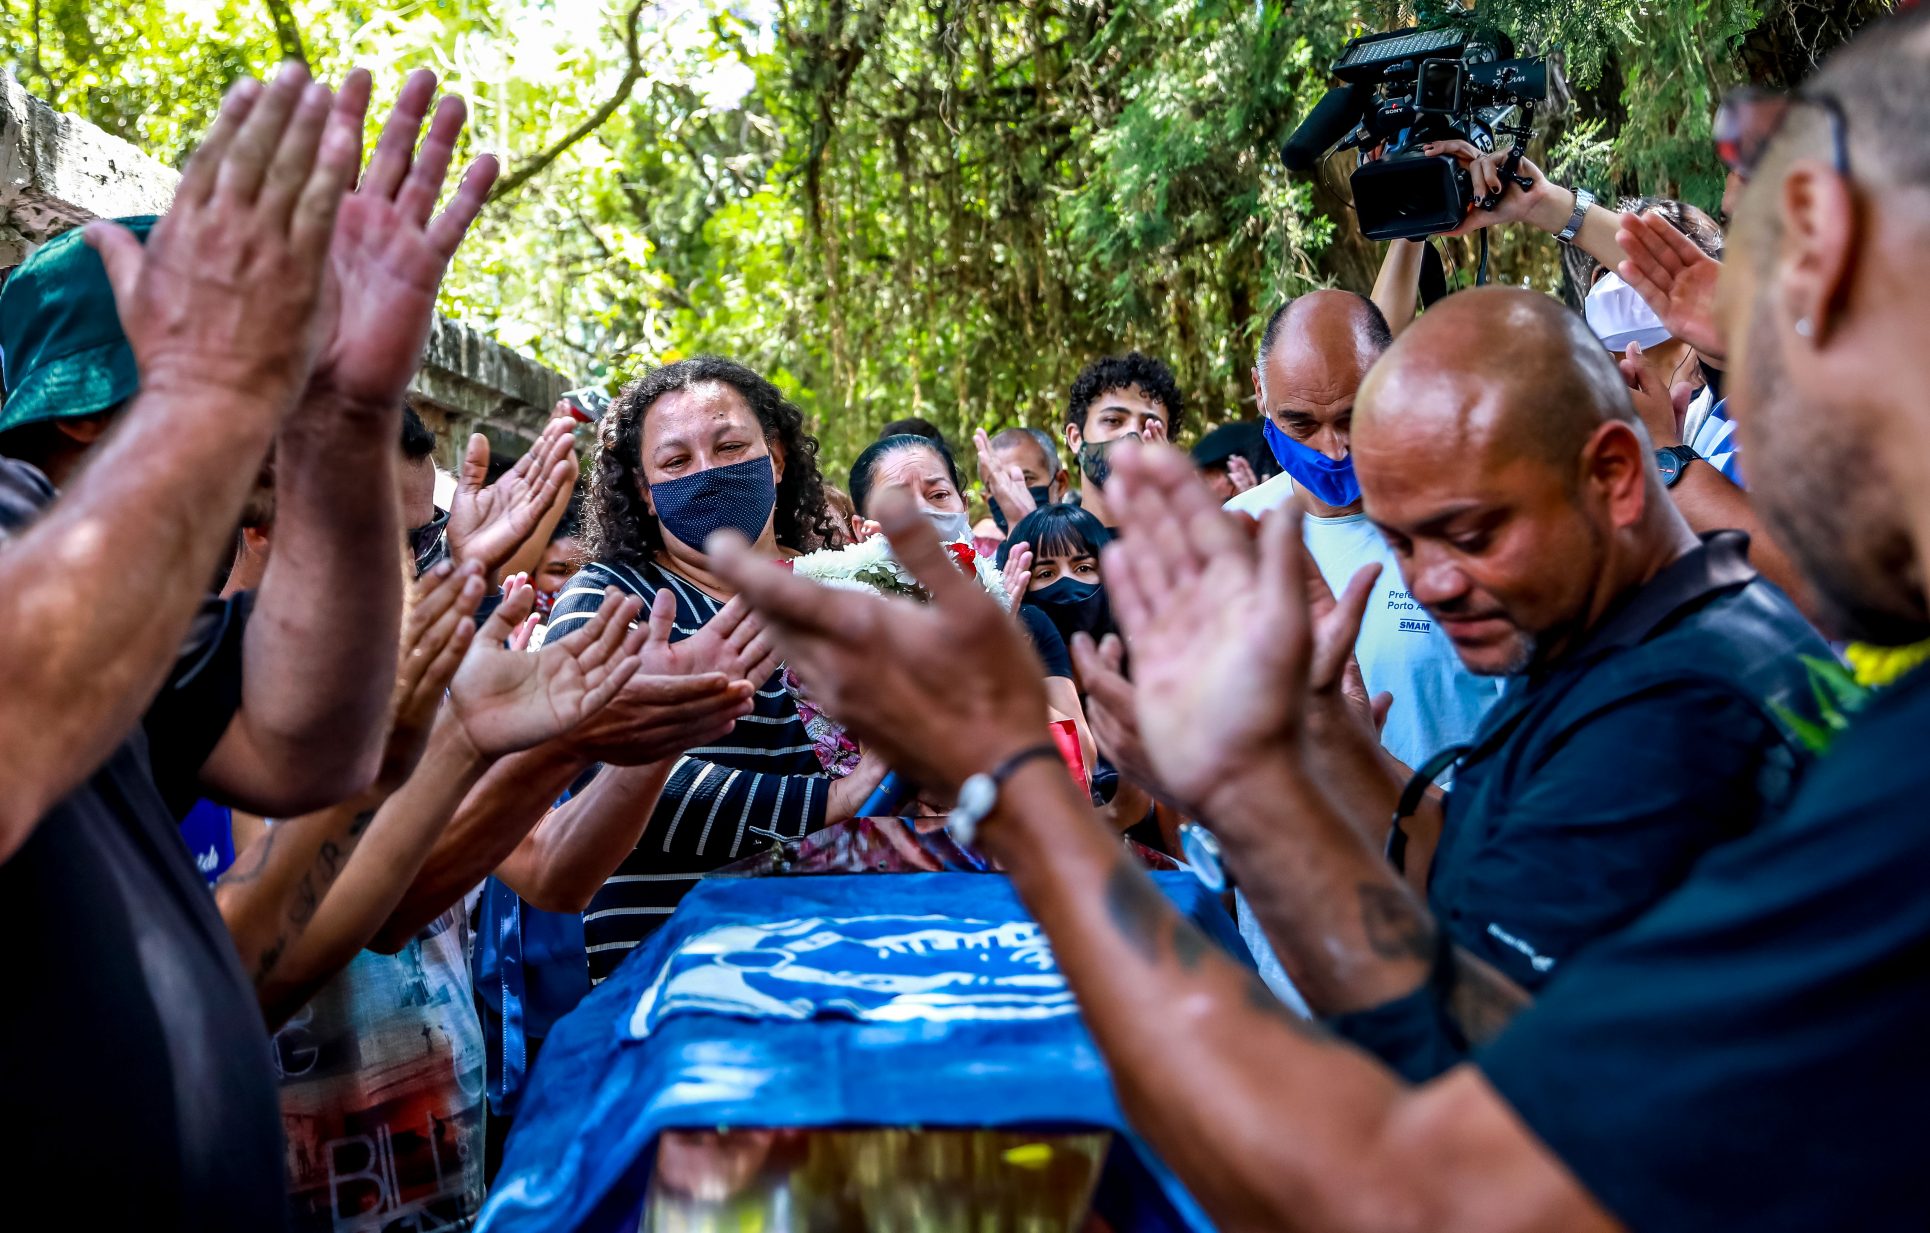 Brasil despide con “inmensa tristeza” al hombre negro golpeado hasta la muerte